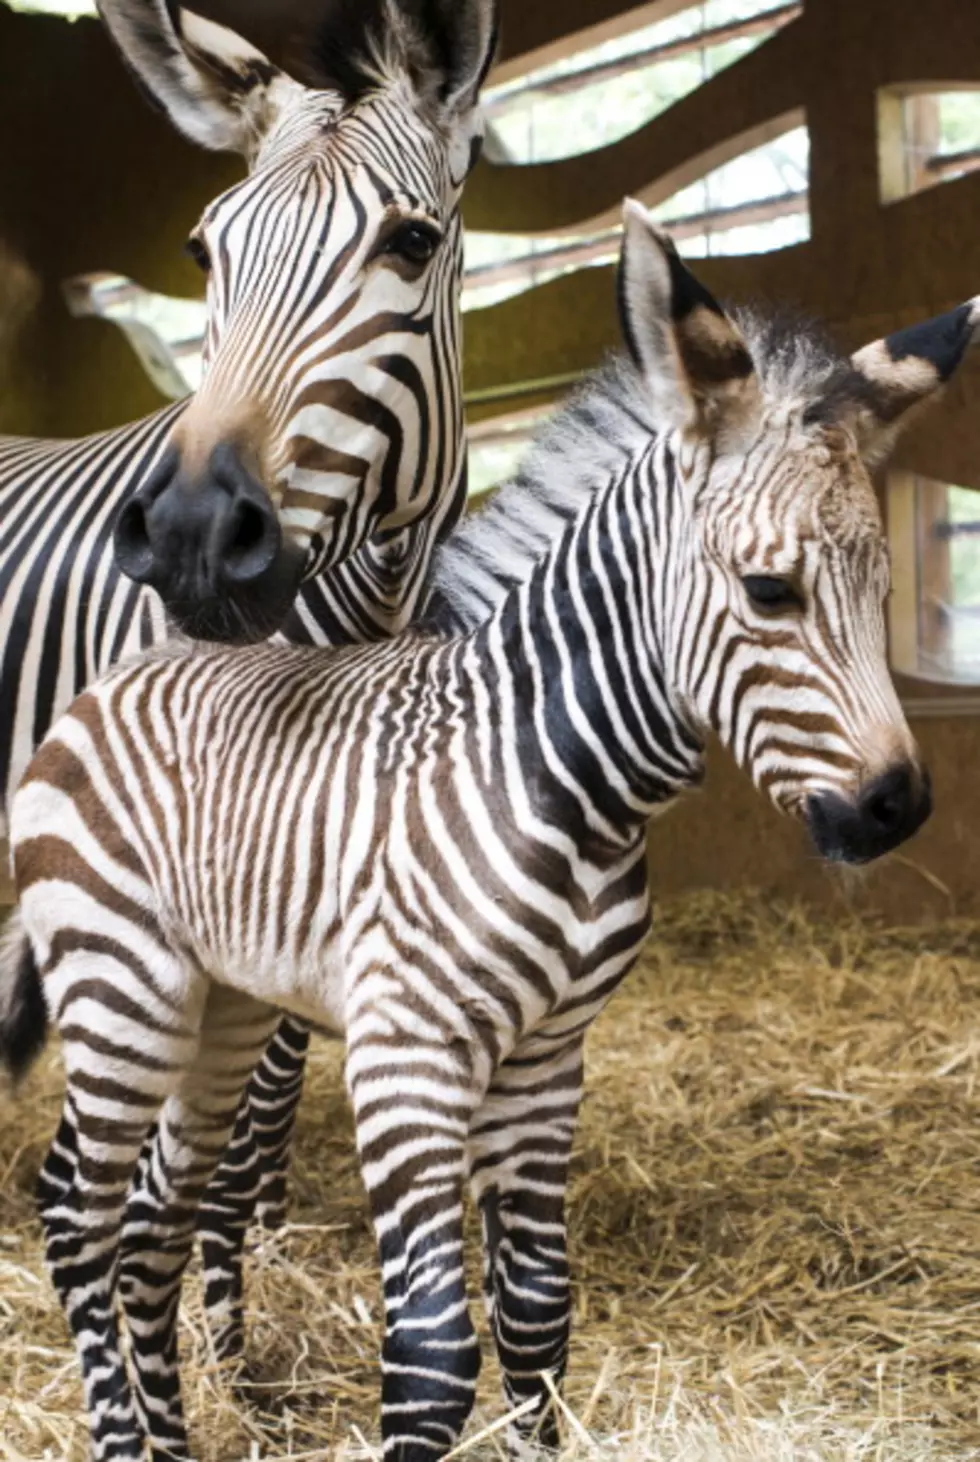 Why Do Zebra’s have Stripes?